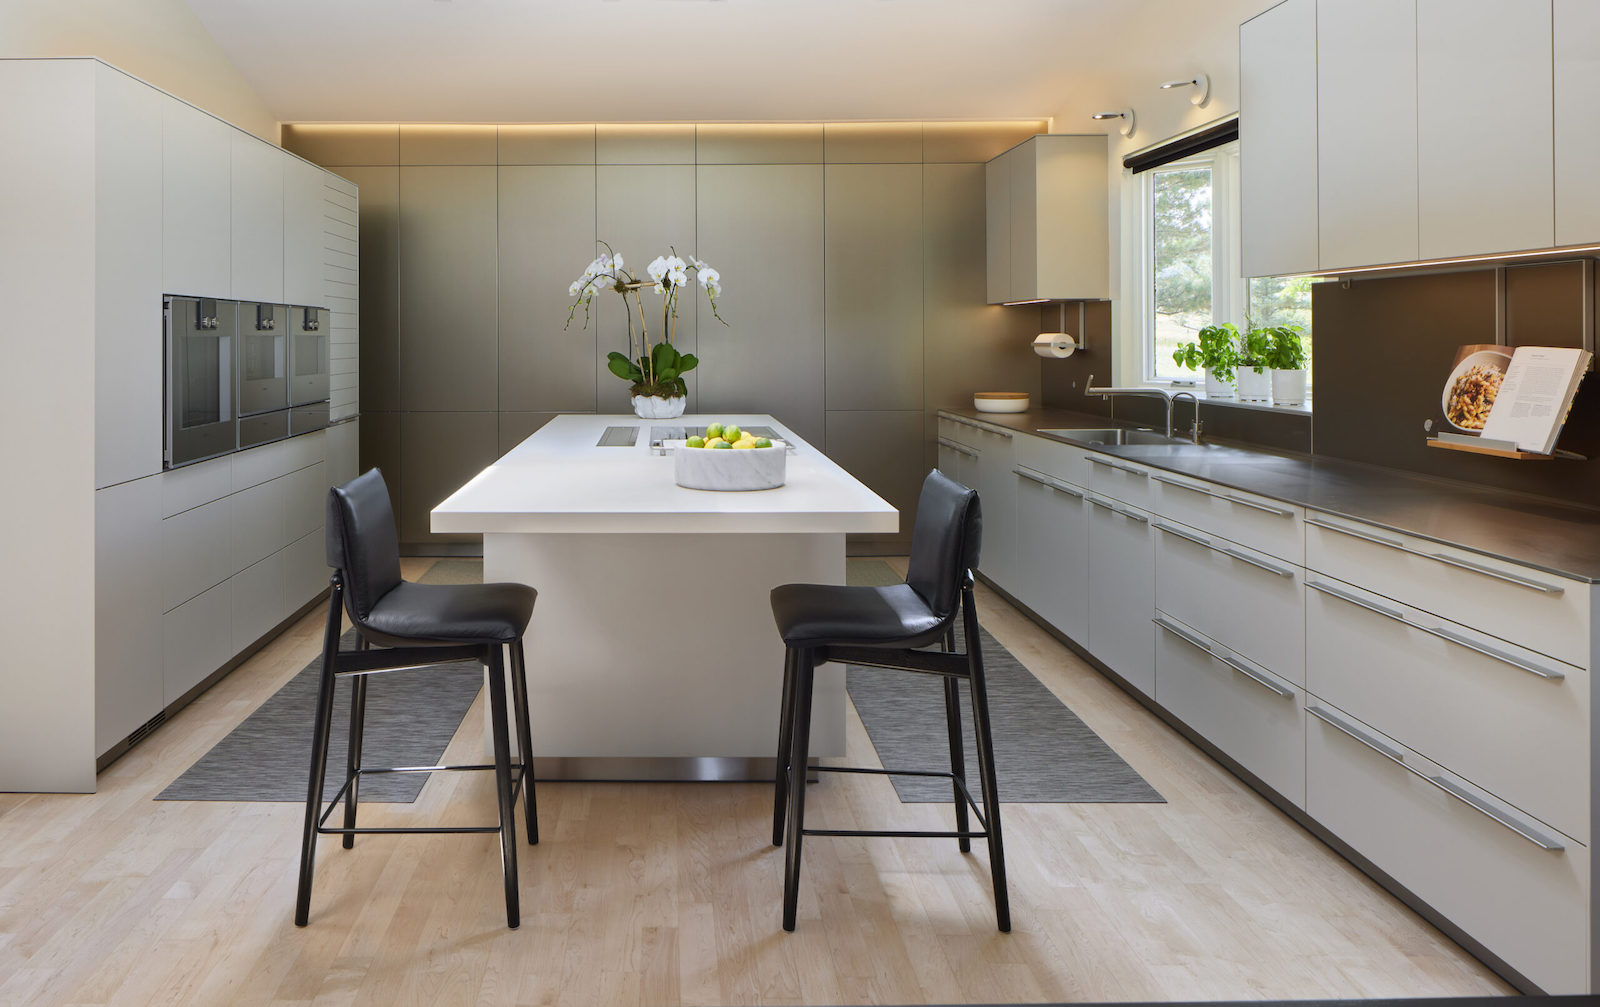 sleek cabinetry in kitchen